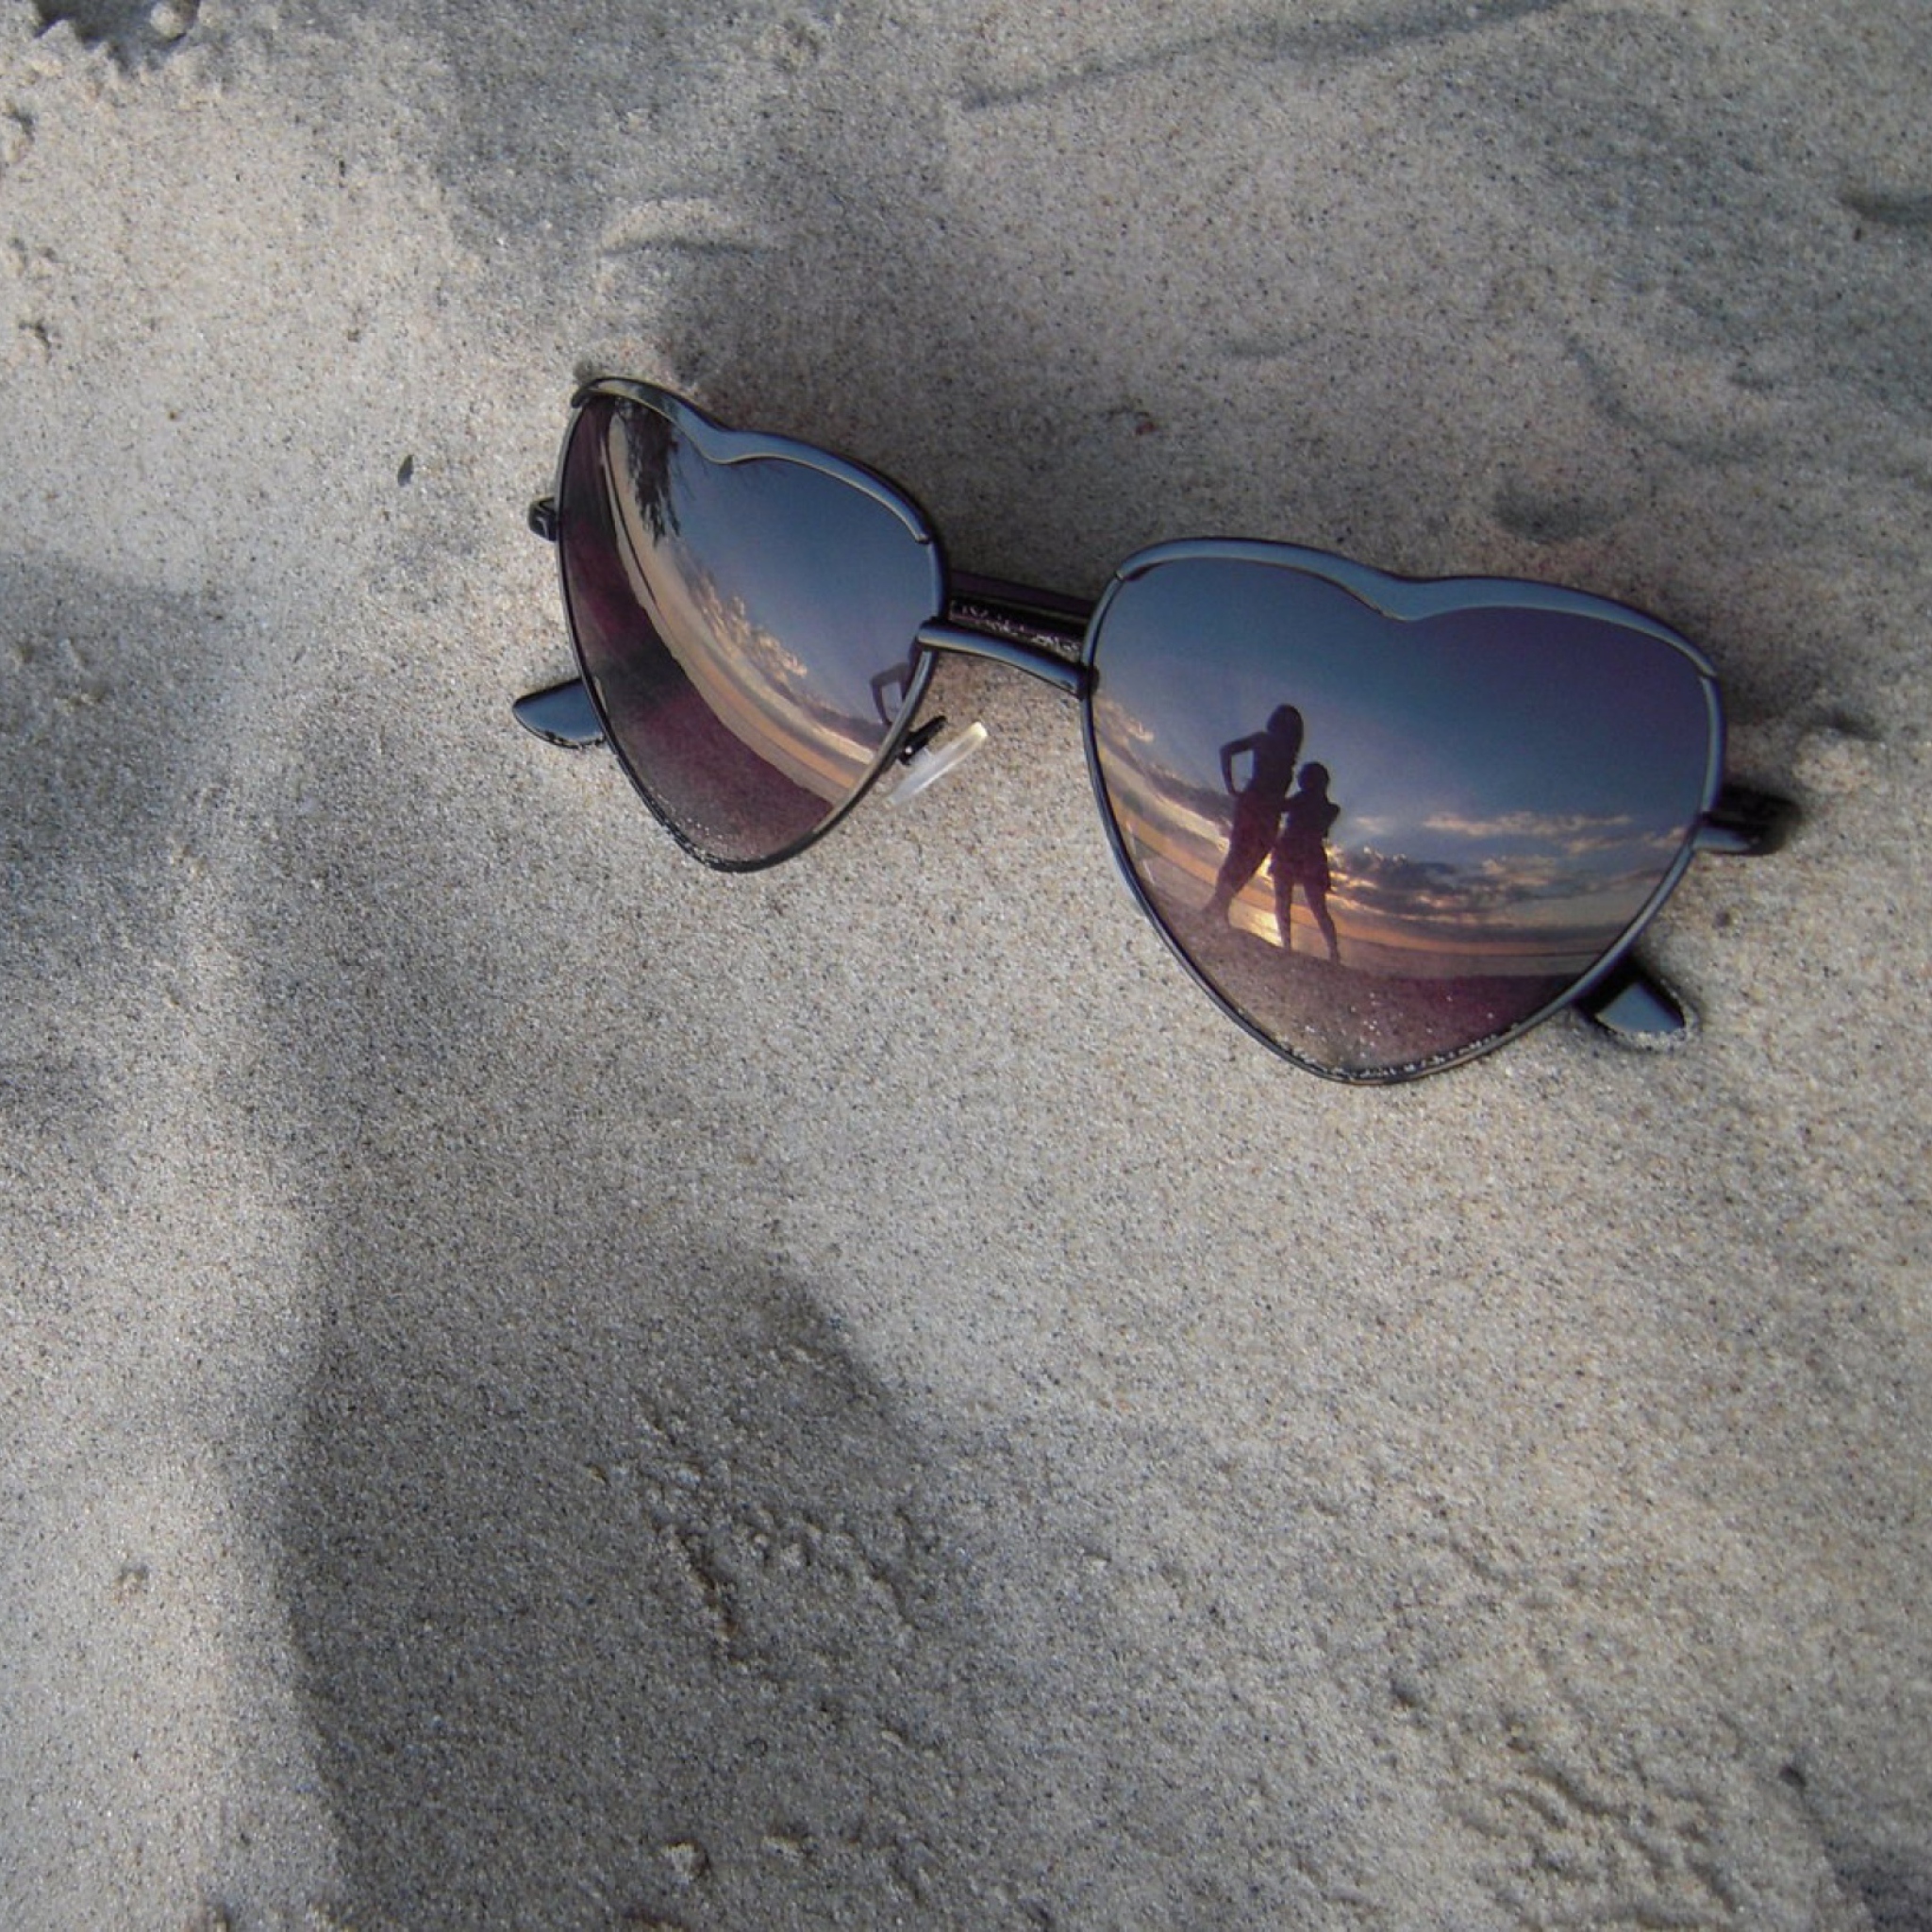 Sunglasses On Sand wallpaper 2048x2048